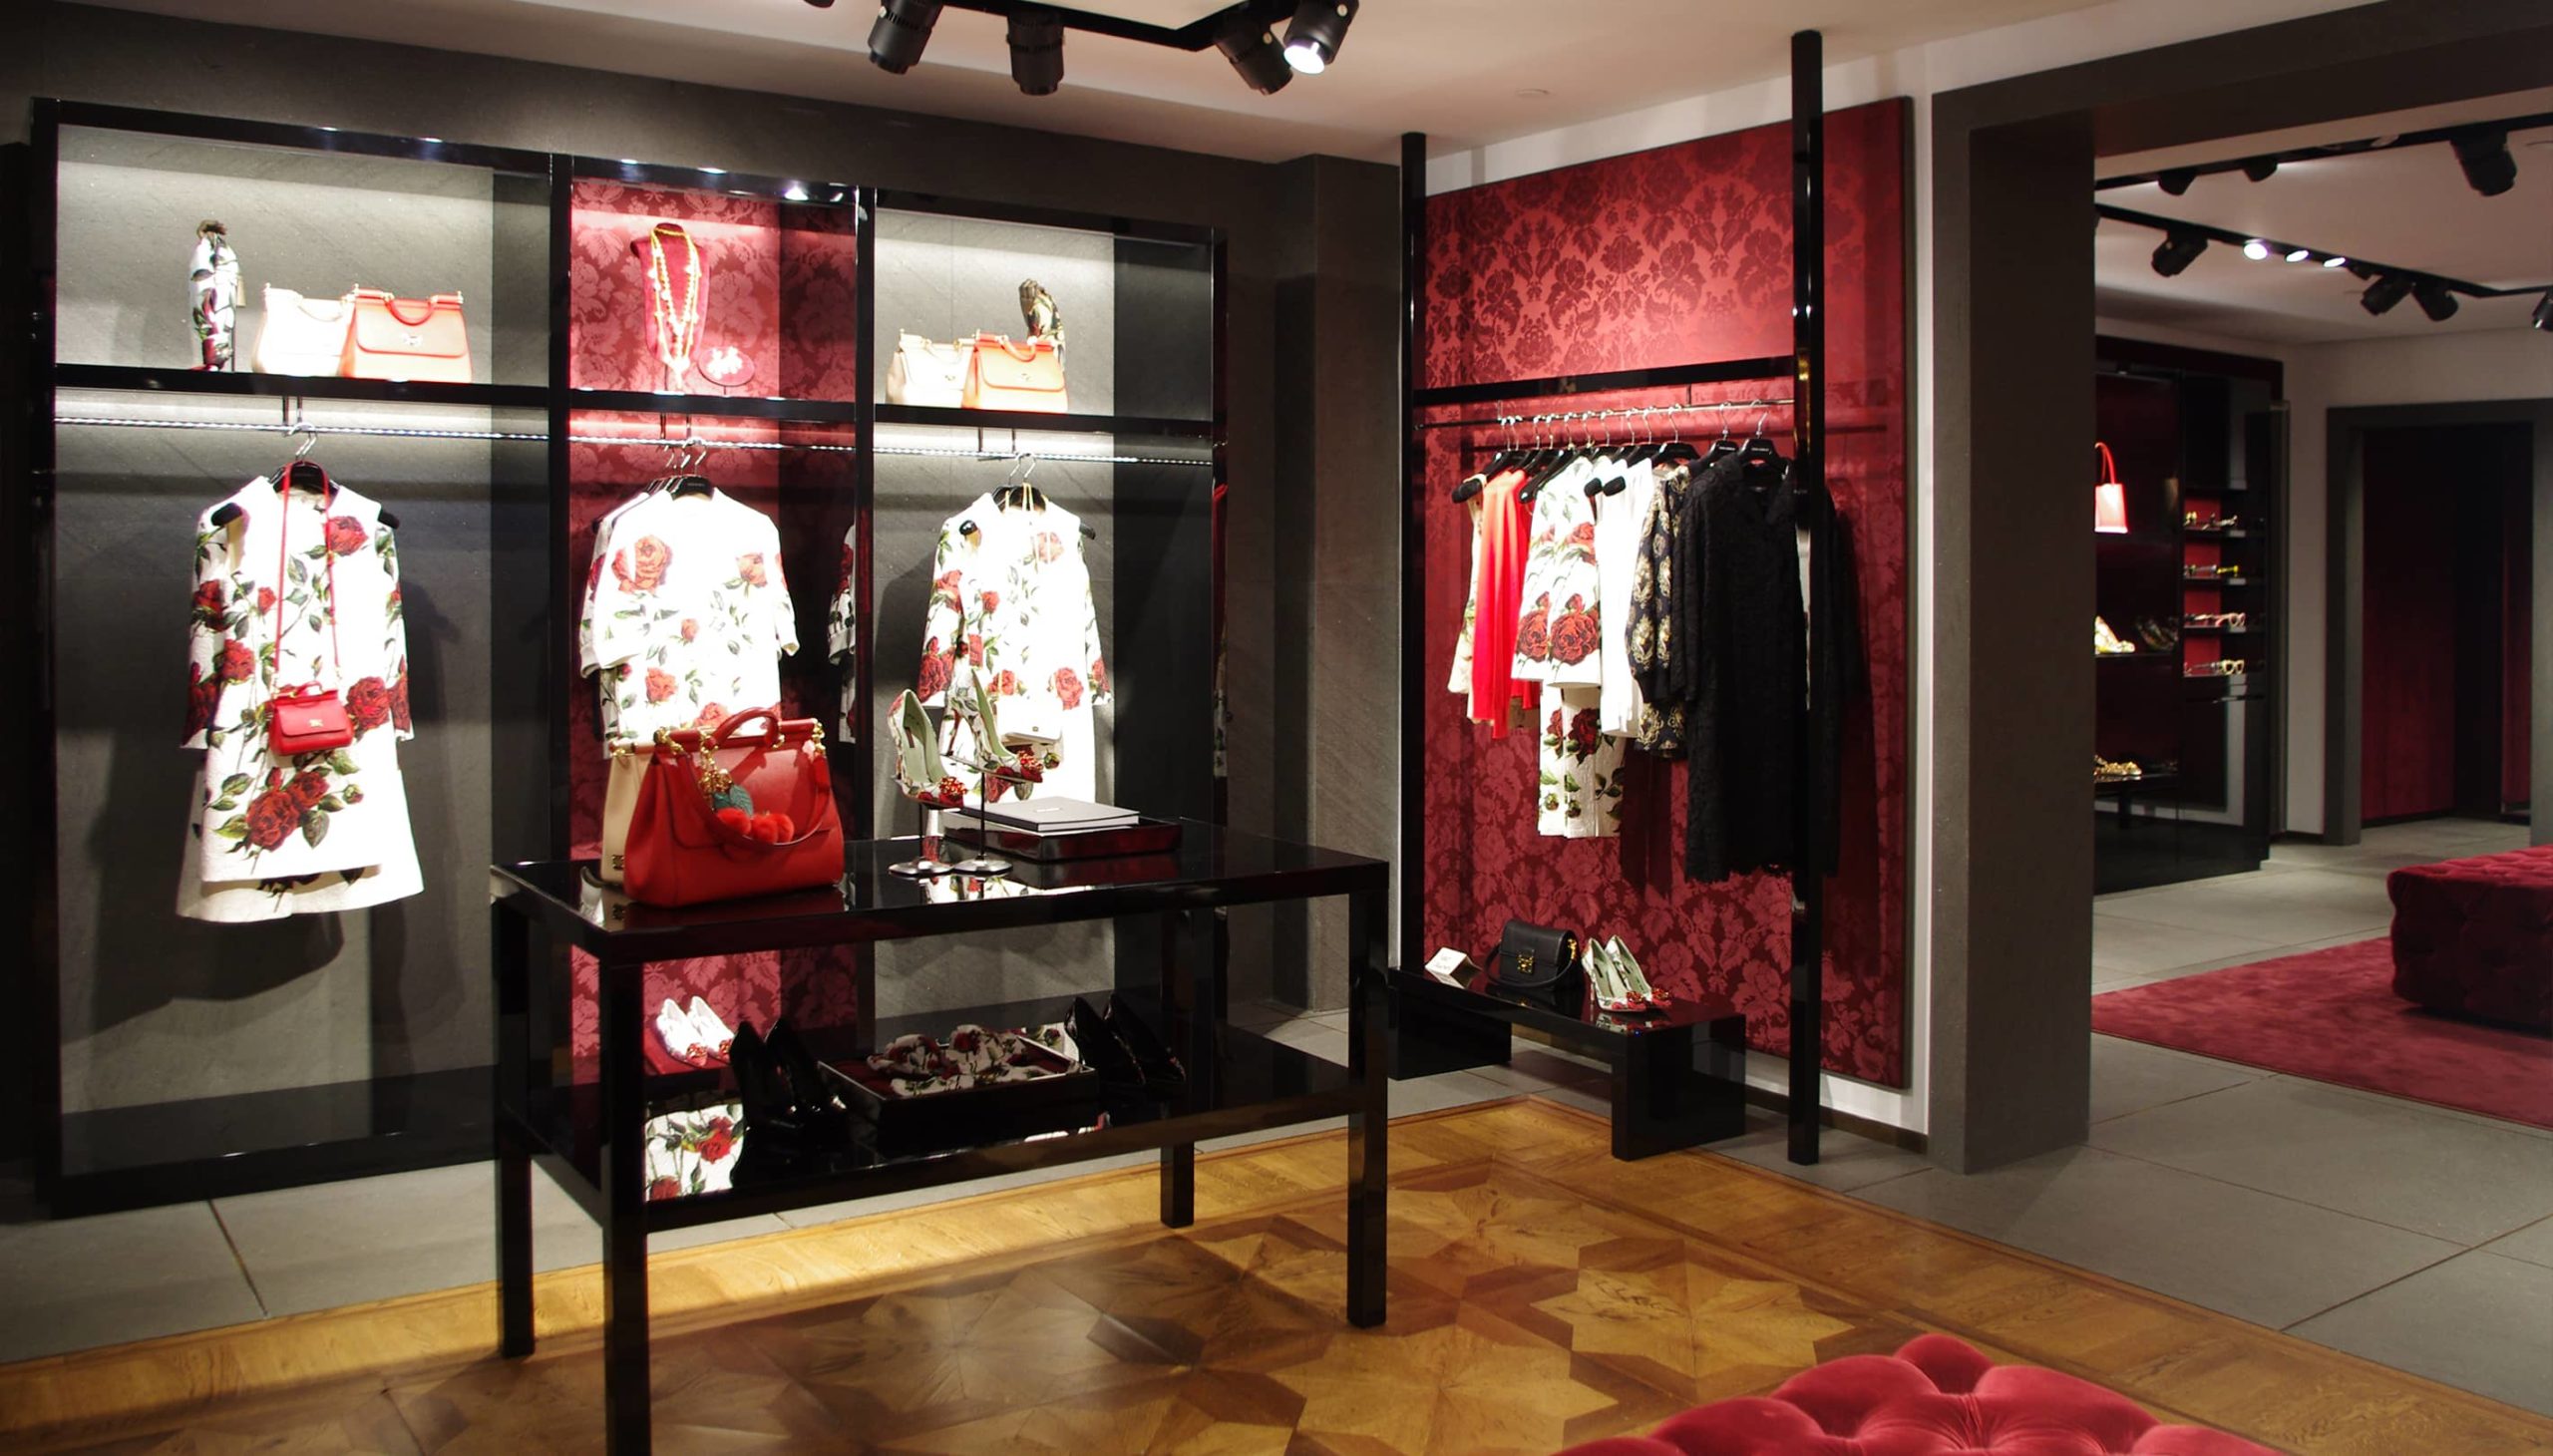 Dolce & Gabbana Retail Store - Studio Luz Architects